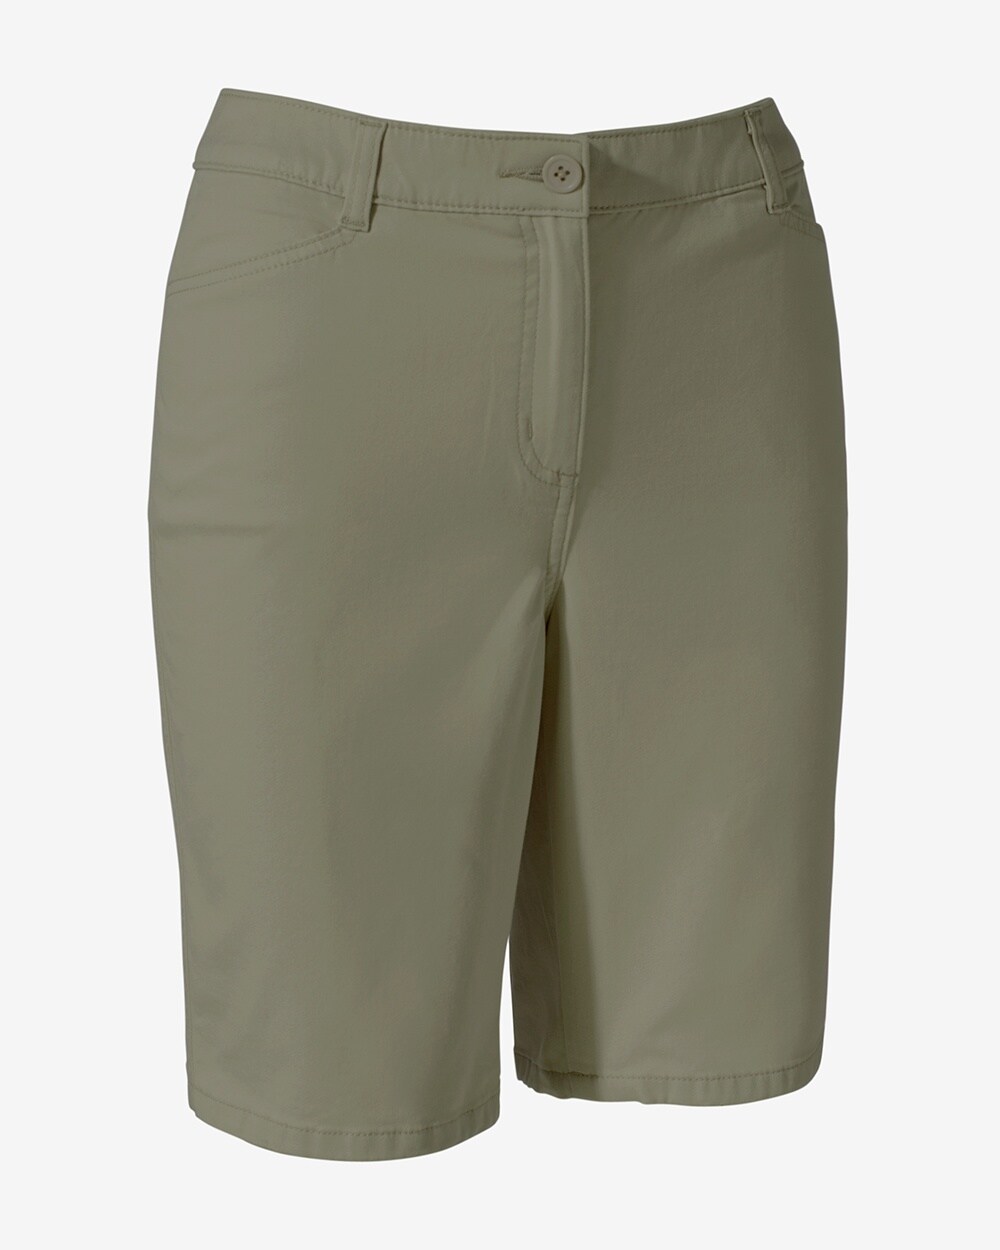 Twill Chino Shorts- 9.5 Inch Inseam